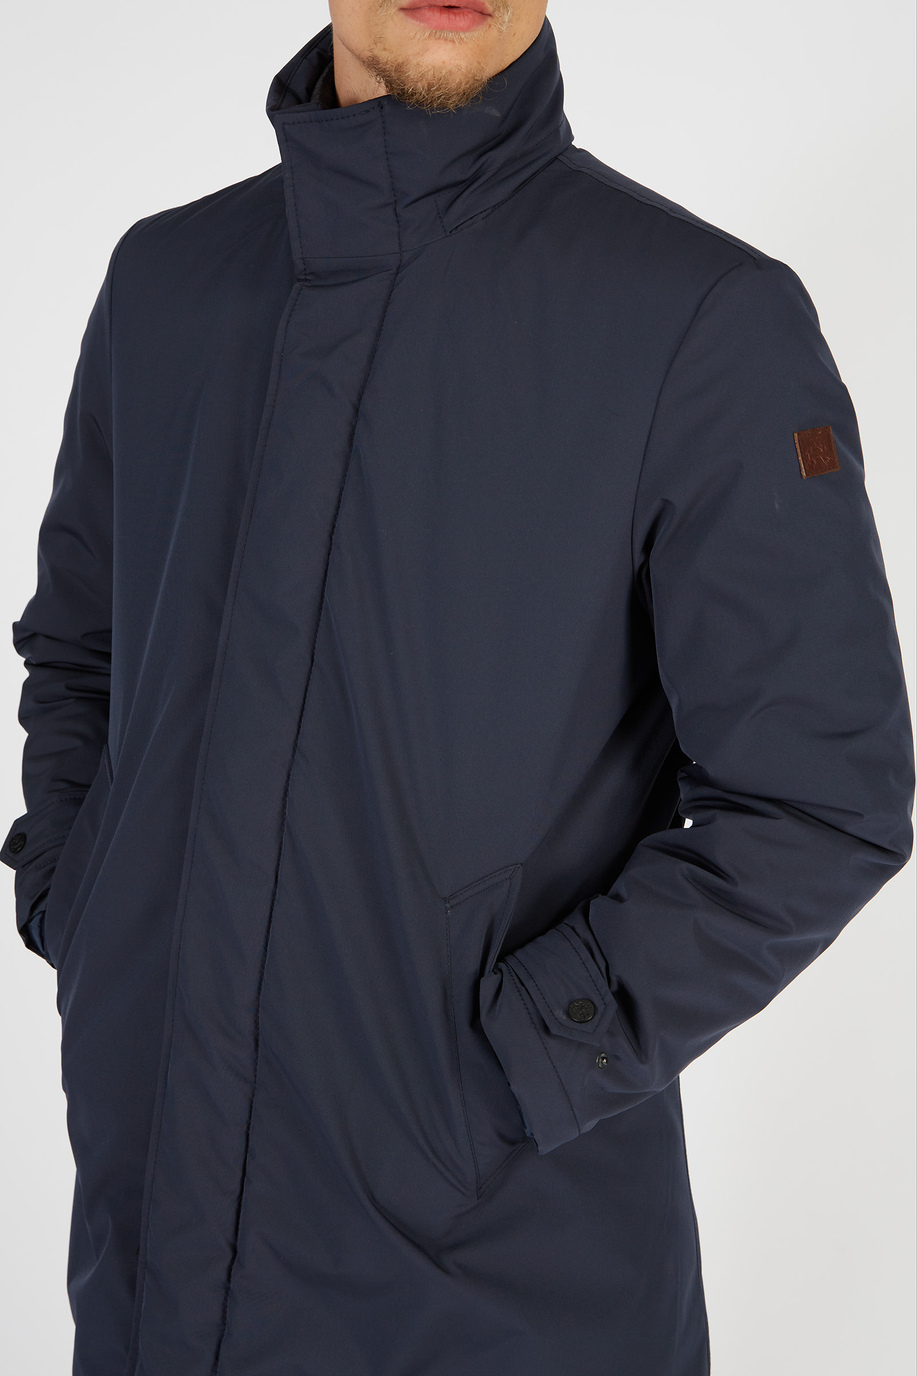 Men’s Blue Ribbon jacket in regular fit nylon | La Martina - Official Online Shop